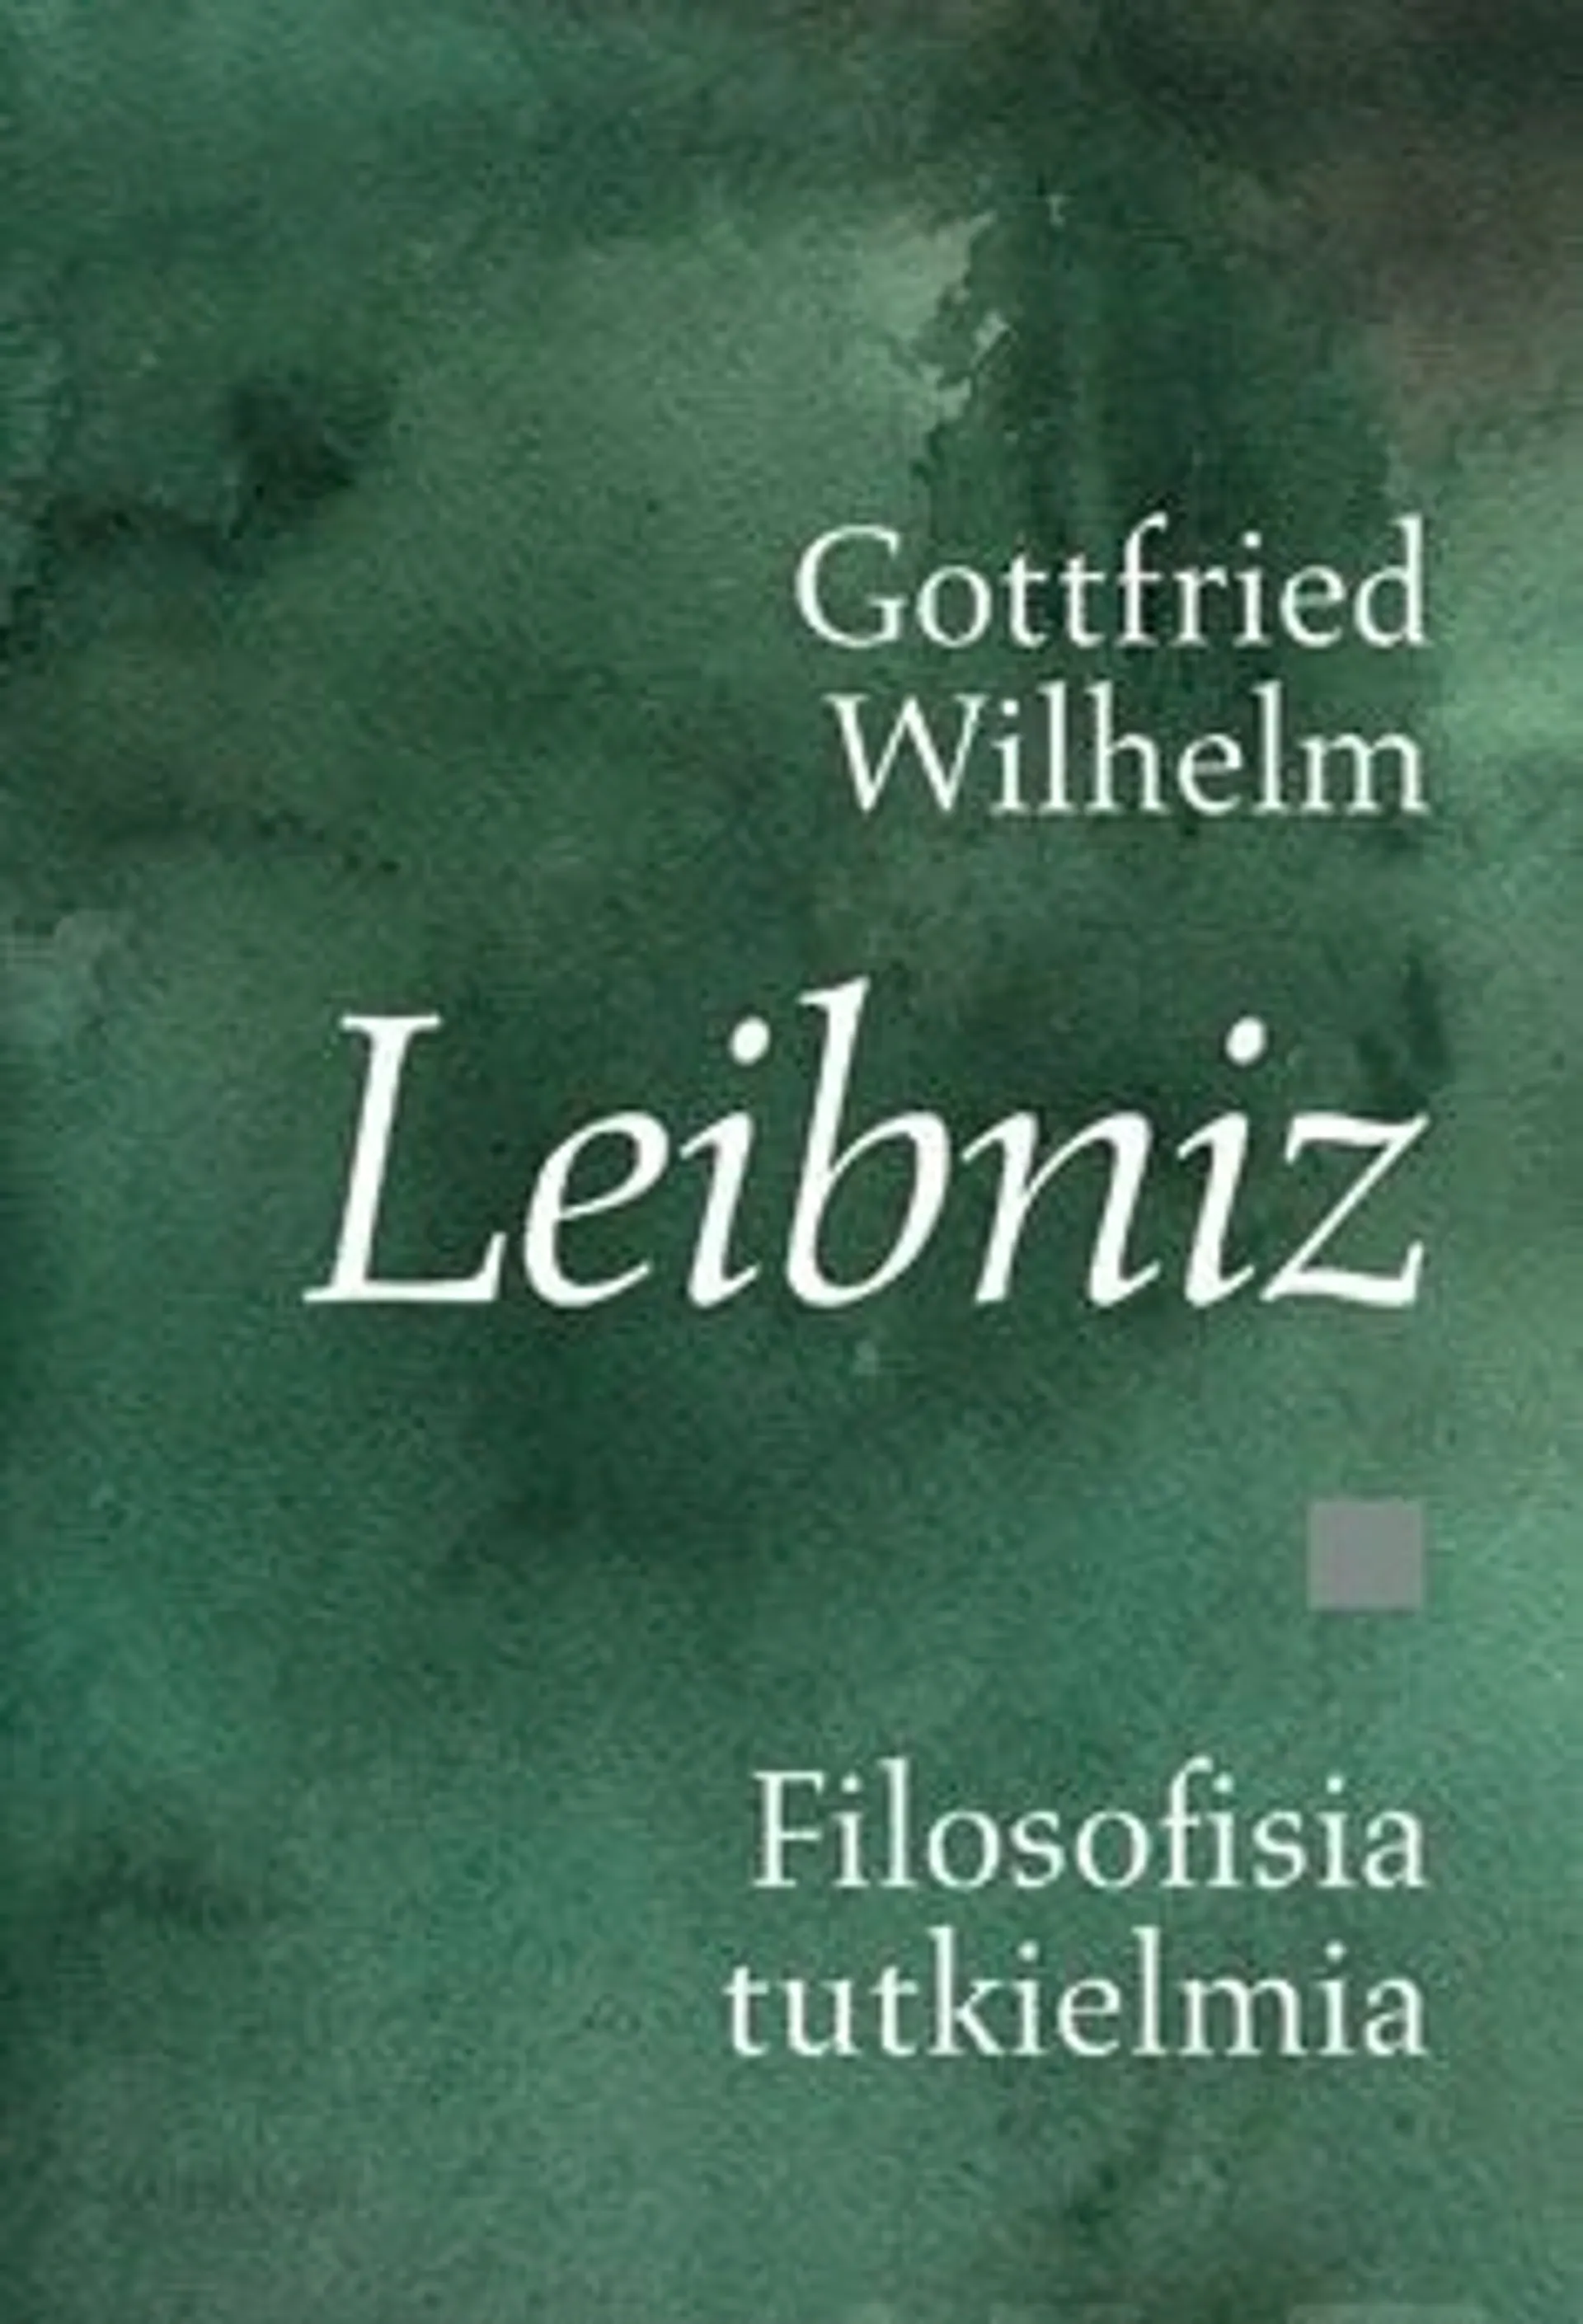 Leibniz, Filosofisia tutkielmia